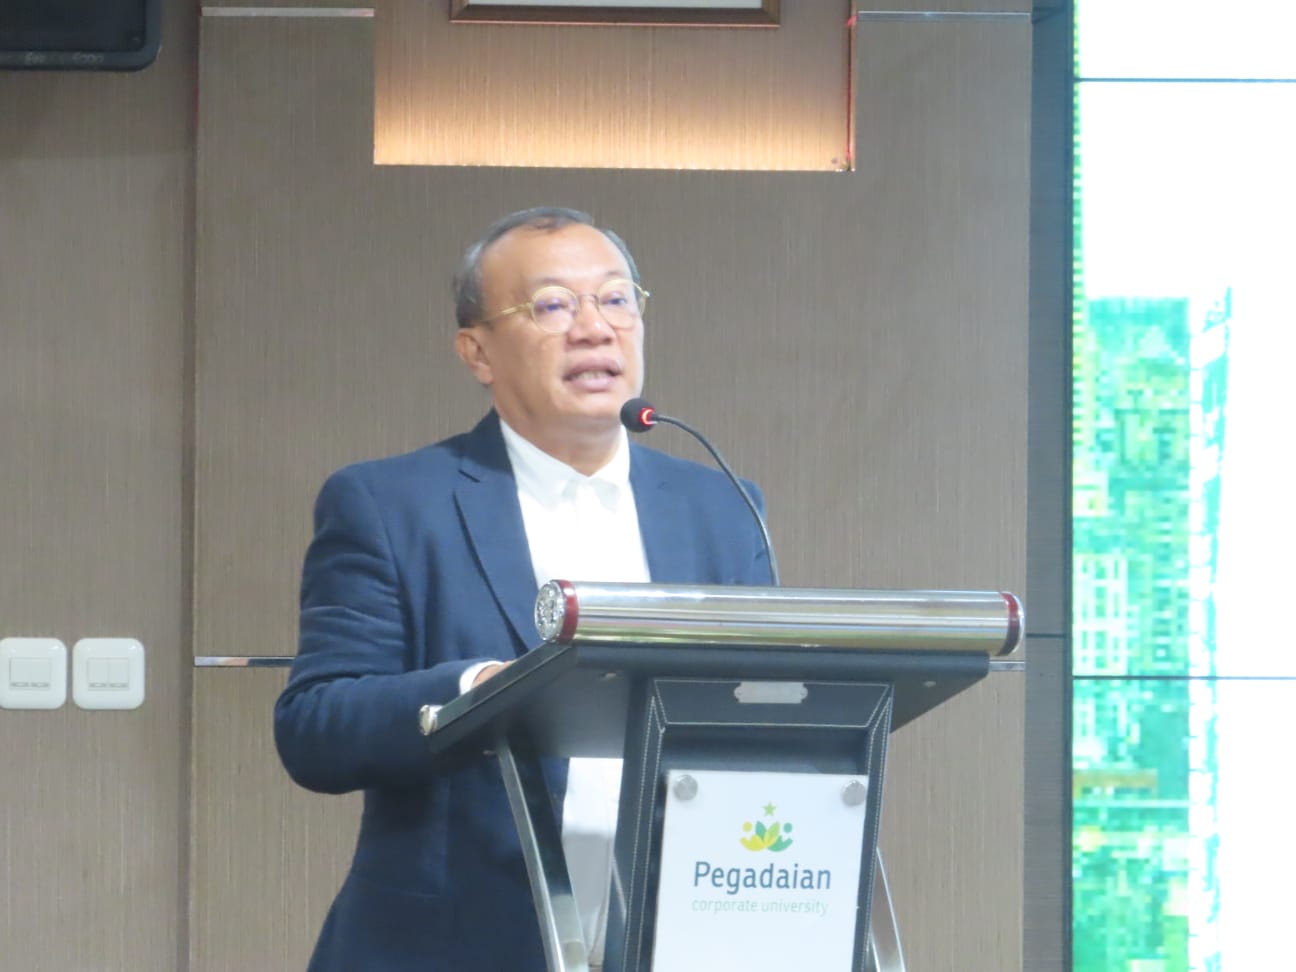 Bekali Pengetahuan Aset Perusahaan, PT Pegadaian Gelar Seminar Tata Kelola Tanah Aset di Surabaya